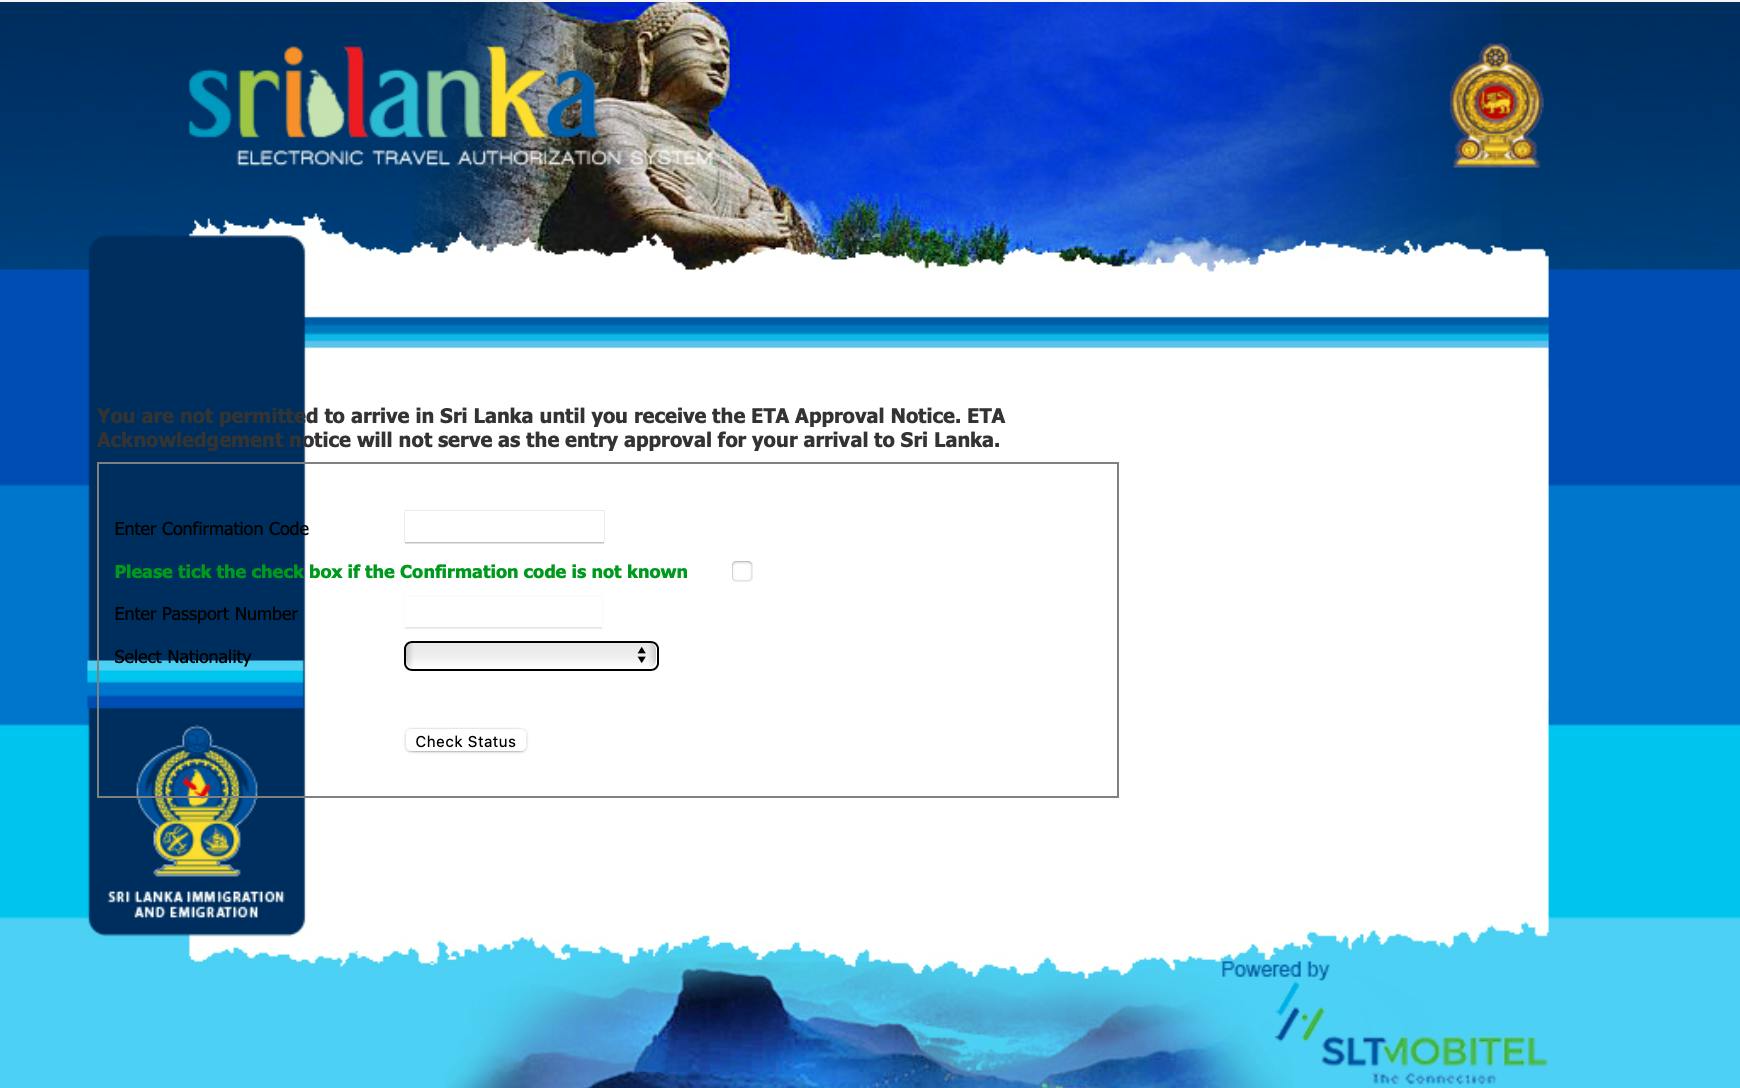 Check the status of your visa status on the Sri Lanka ETA website